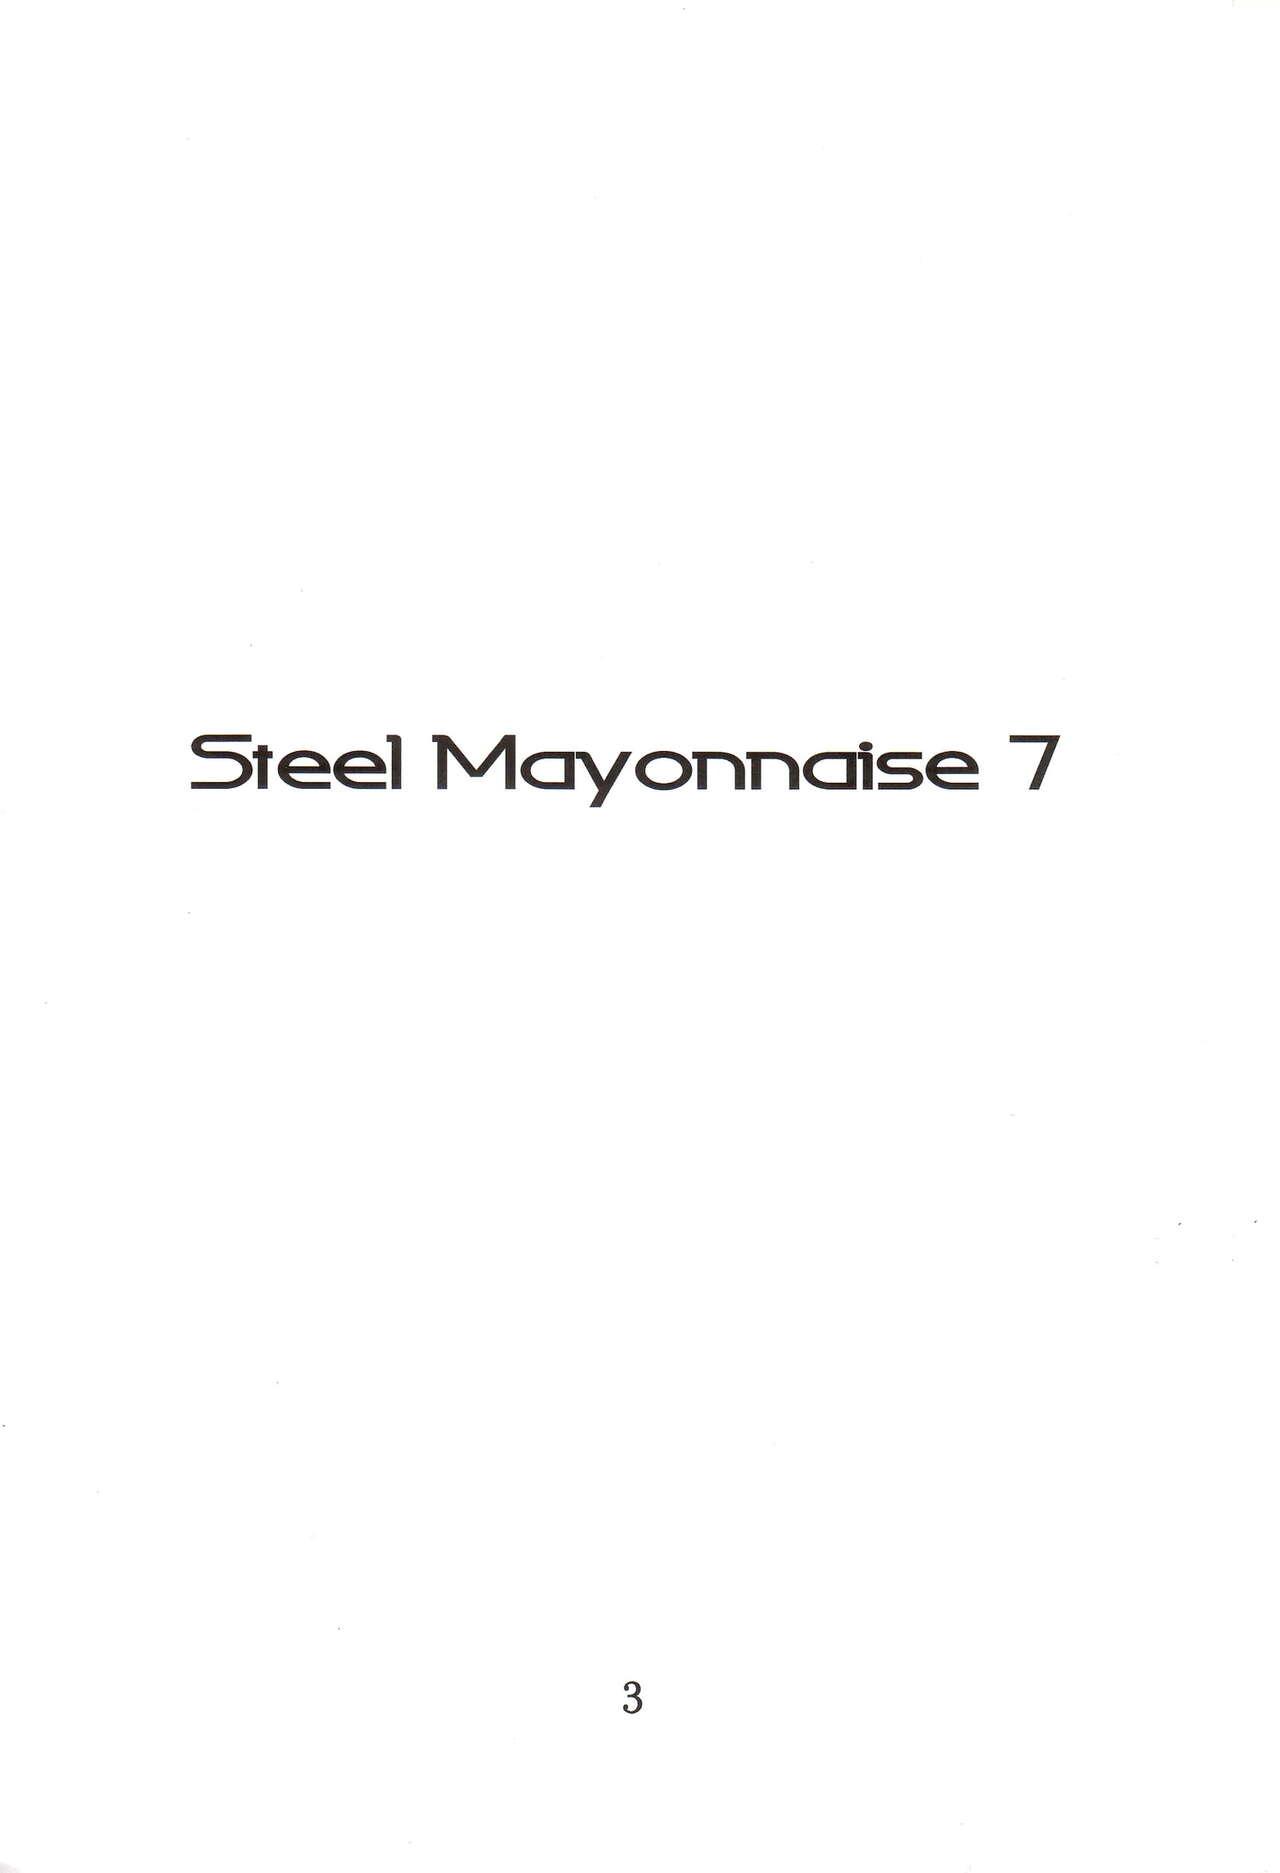 Steel Mayonnaise 7 2